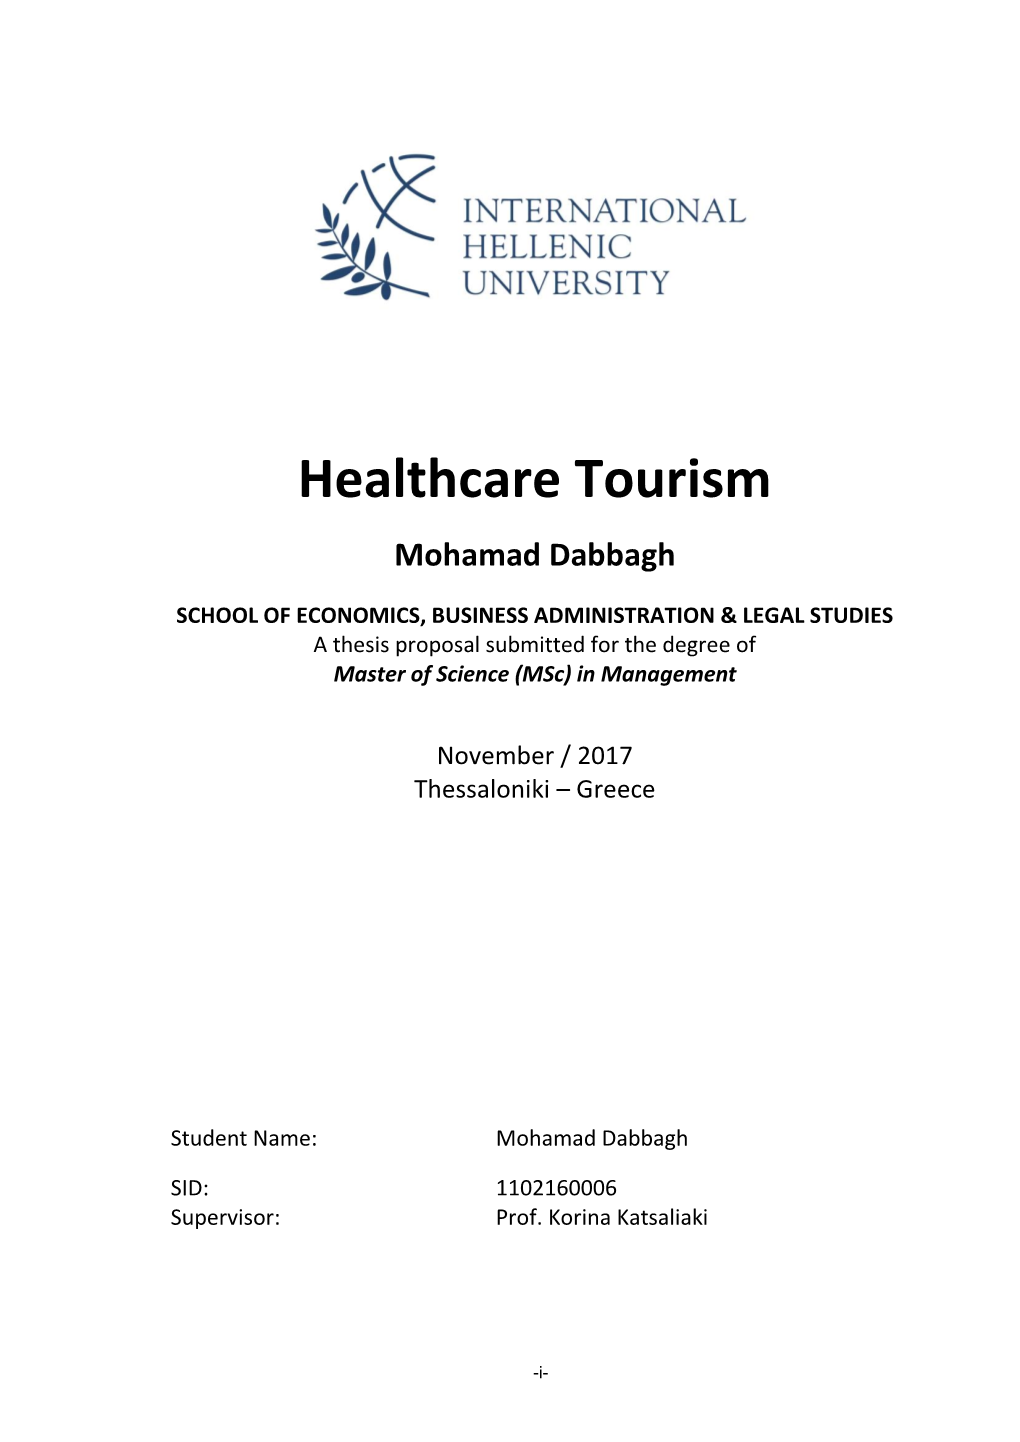 Healthcare Tourism Dissertation Msc in Management